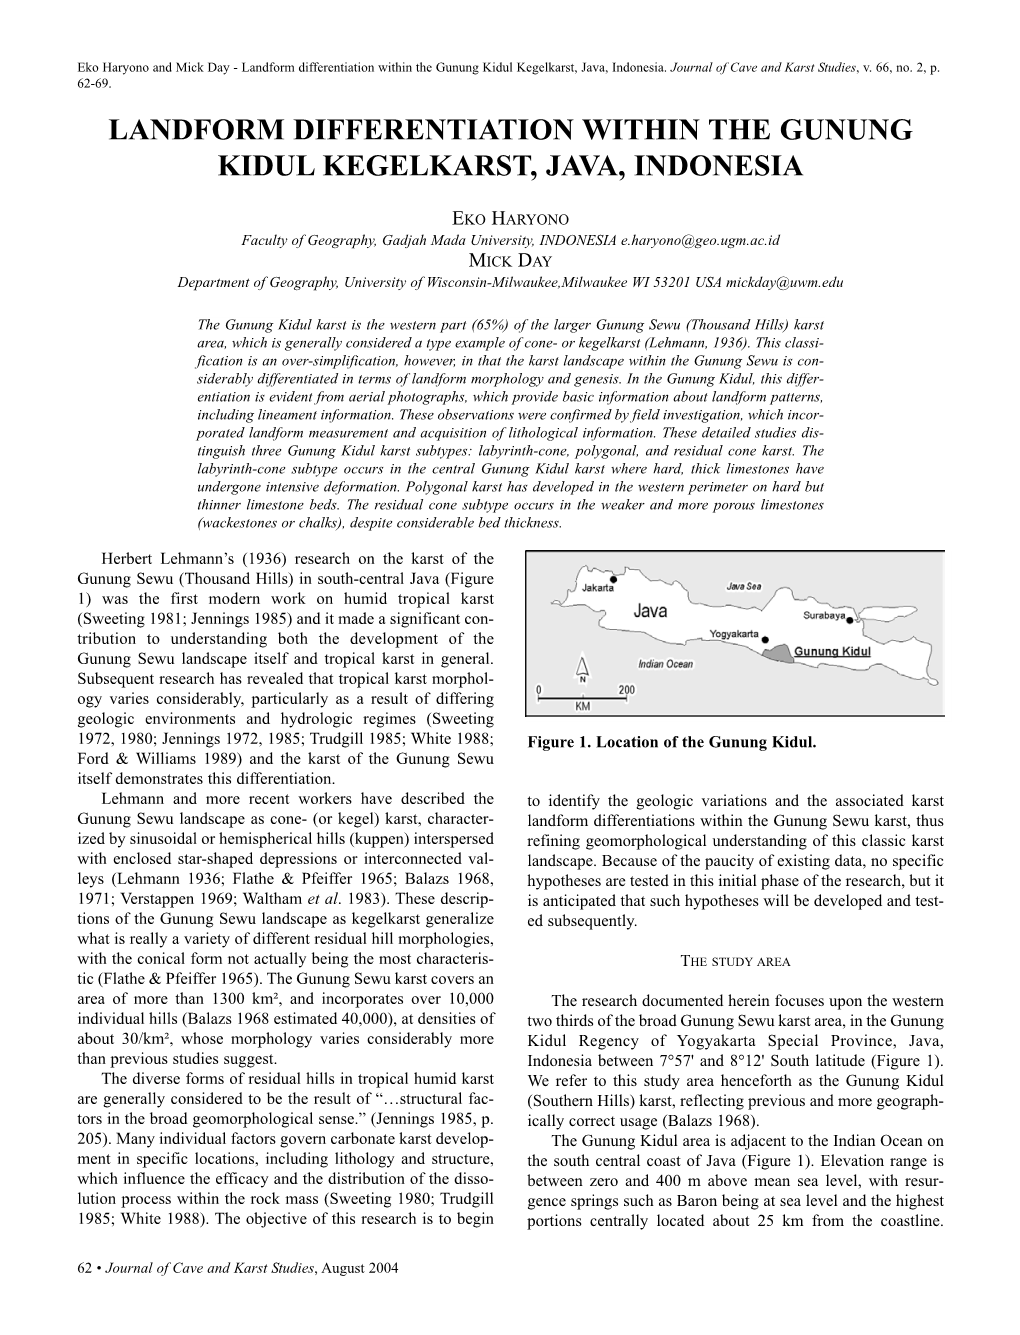 Landform Differentiation Within the Gunung Kidul Kegelkarst, Java, Indonesia